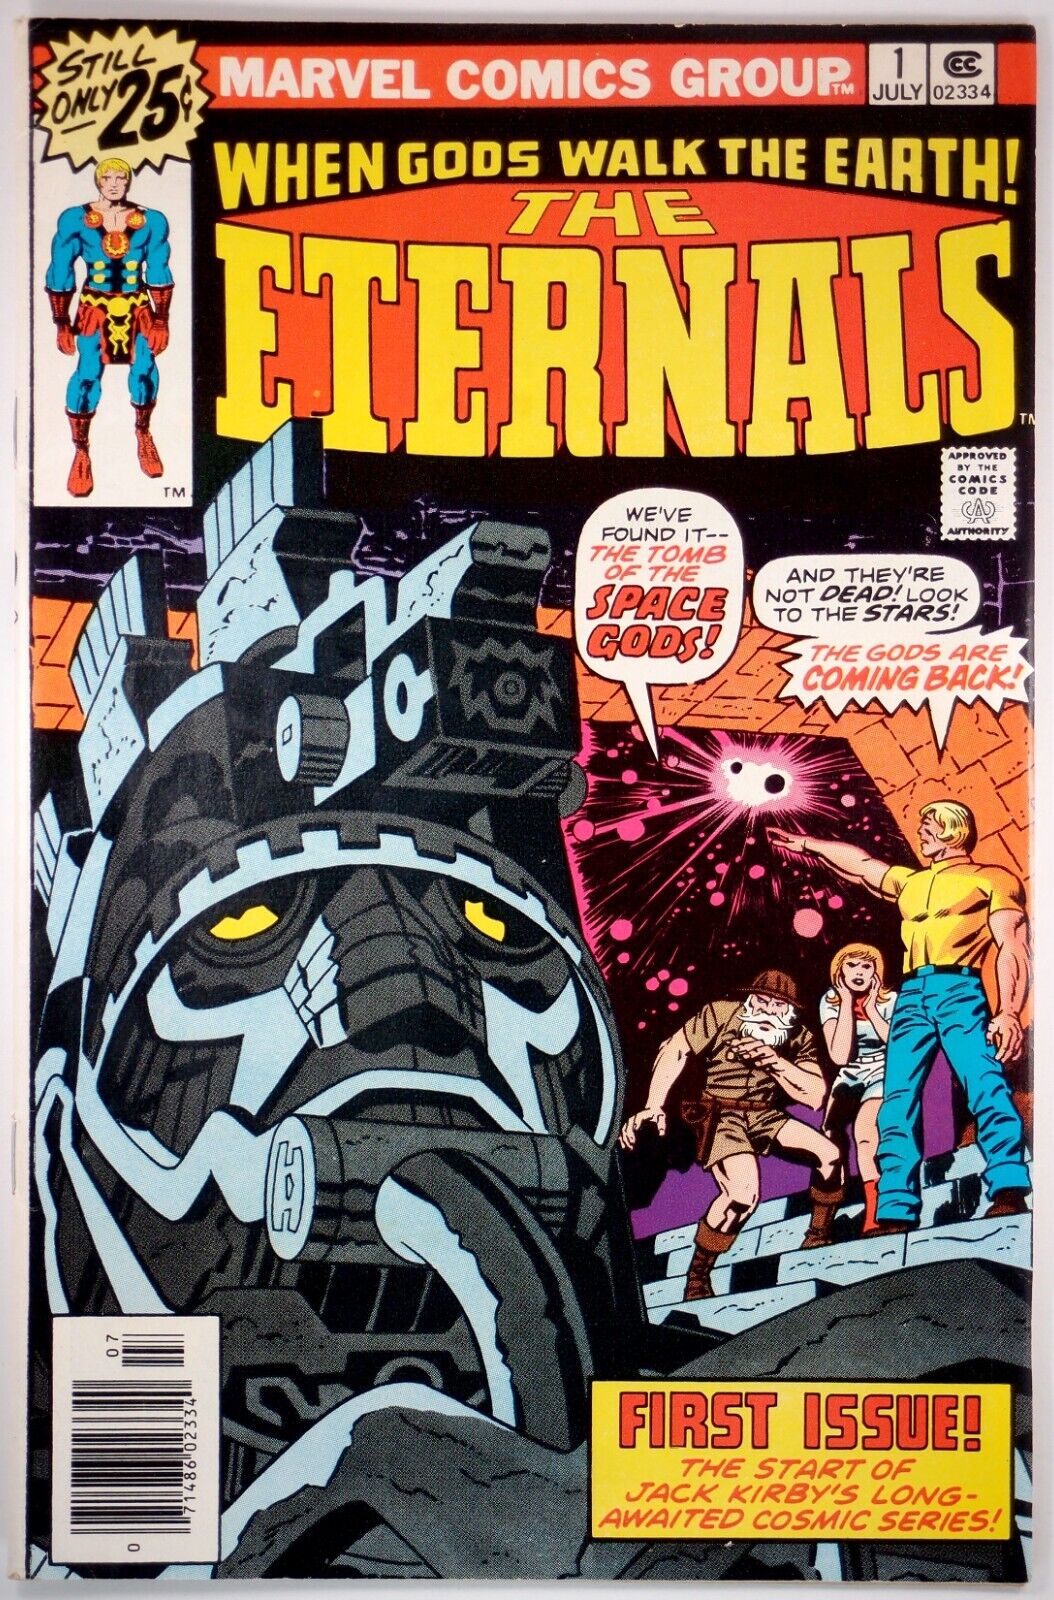 #1 Eternals VF, +6 extra issues, a rare Eternals sampler to sweeten the deal 